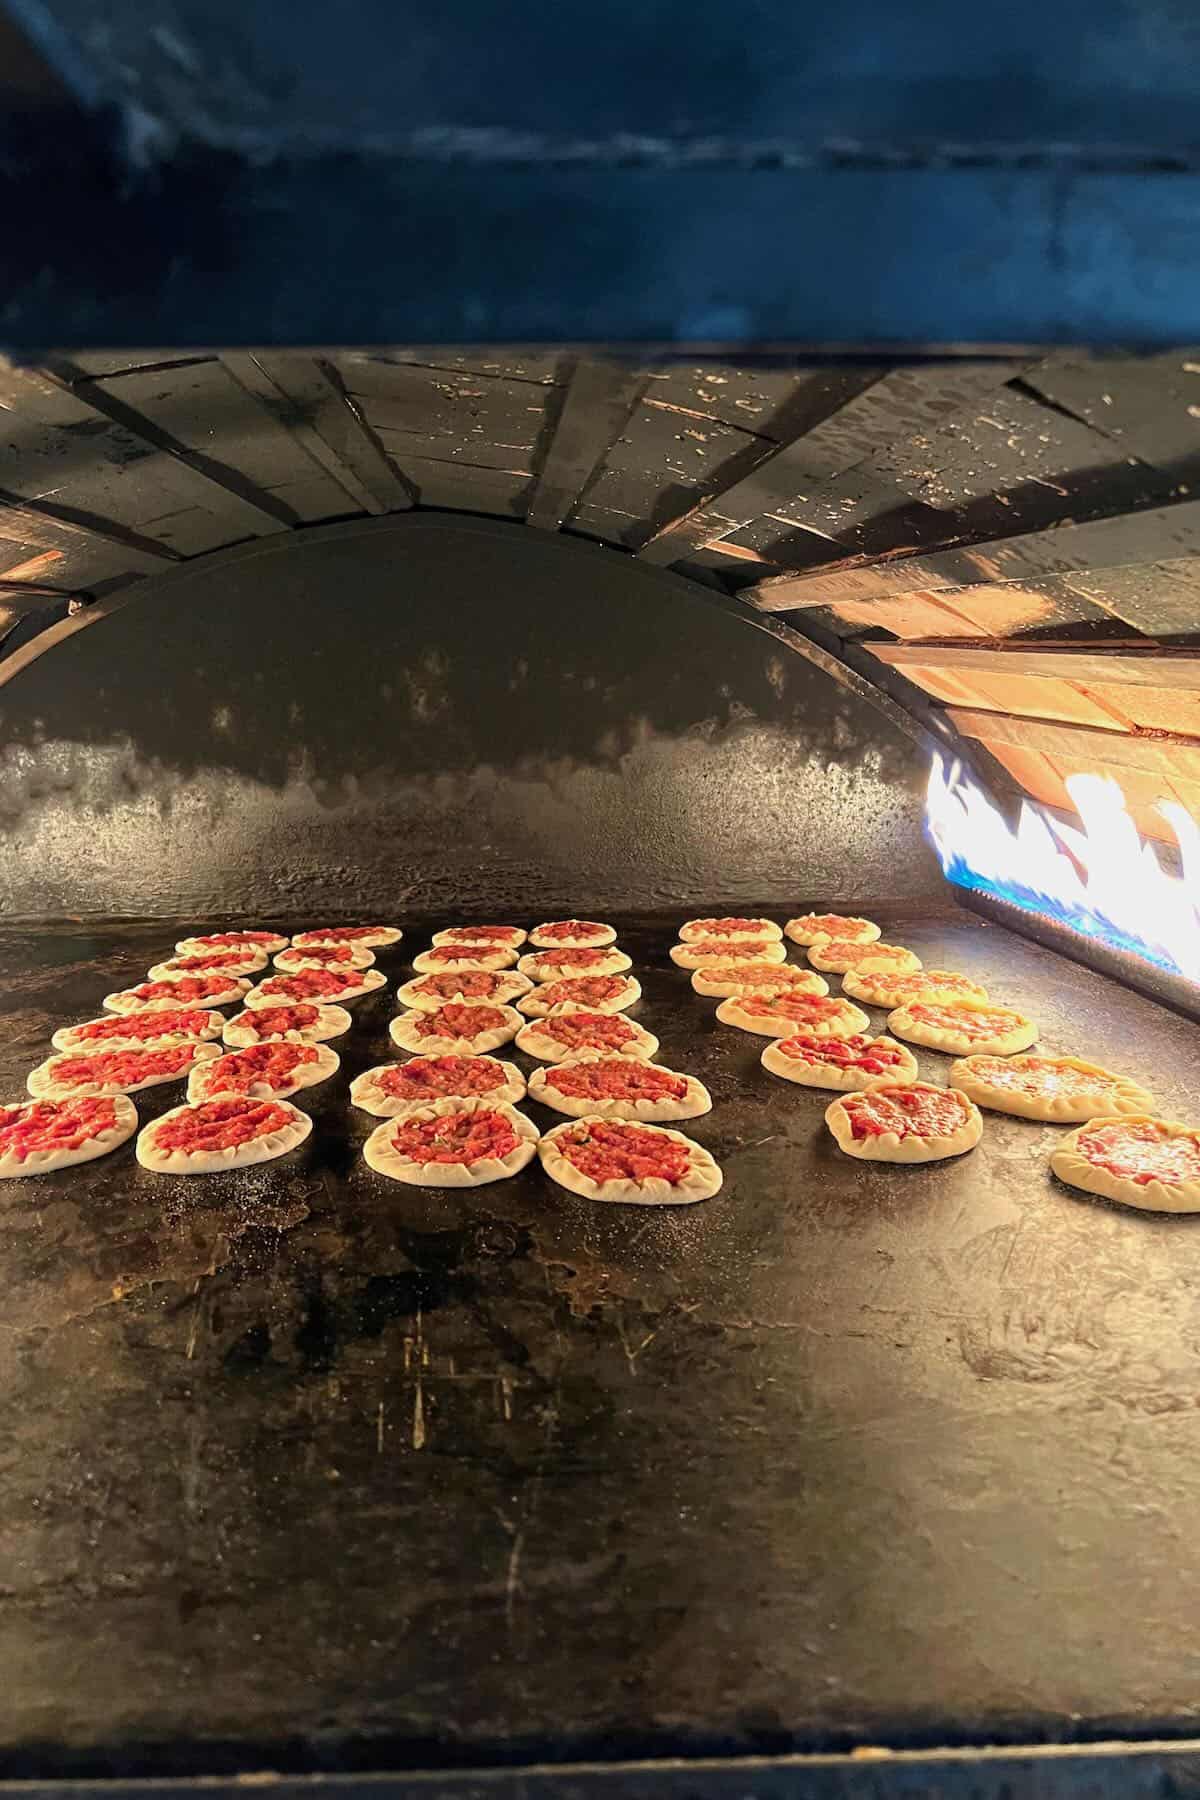 Baking sfiha meat pies